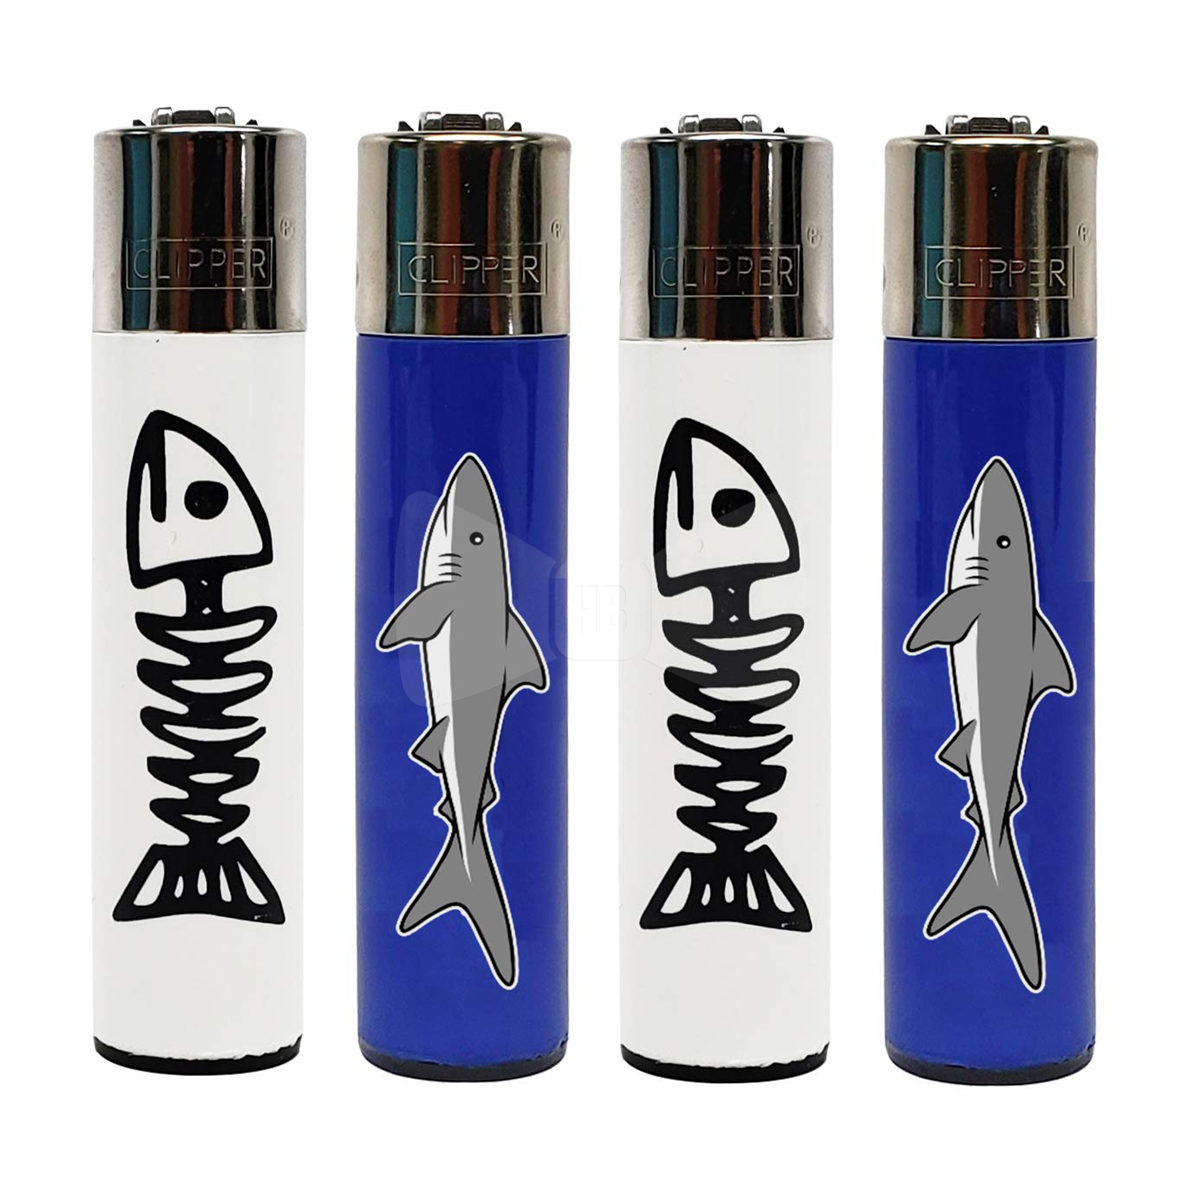 Clipper Shark Lighters